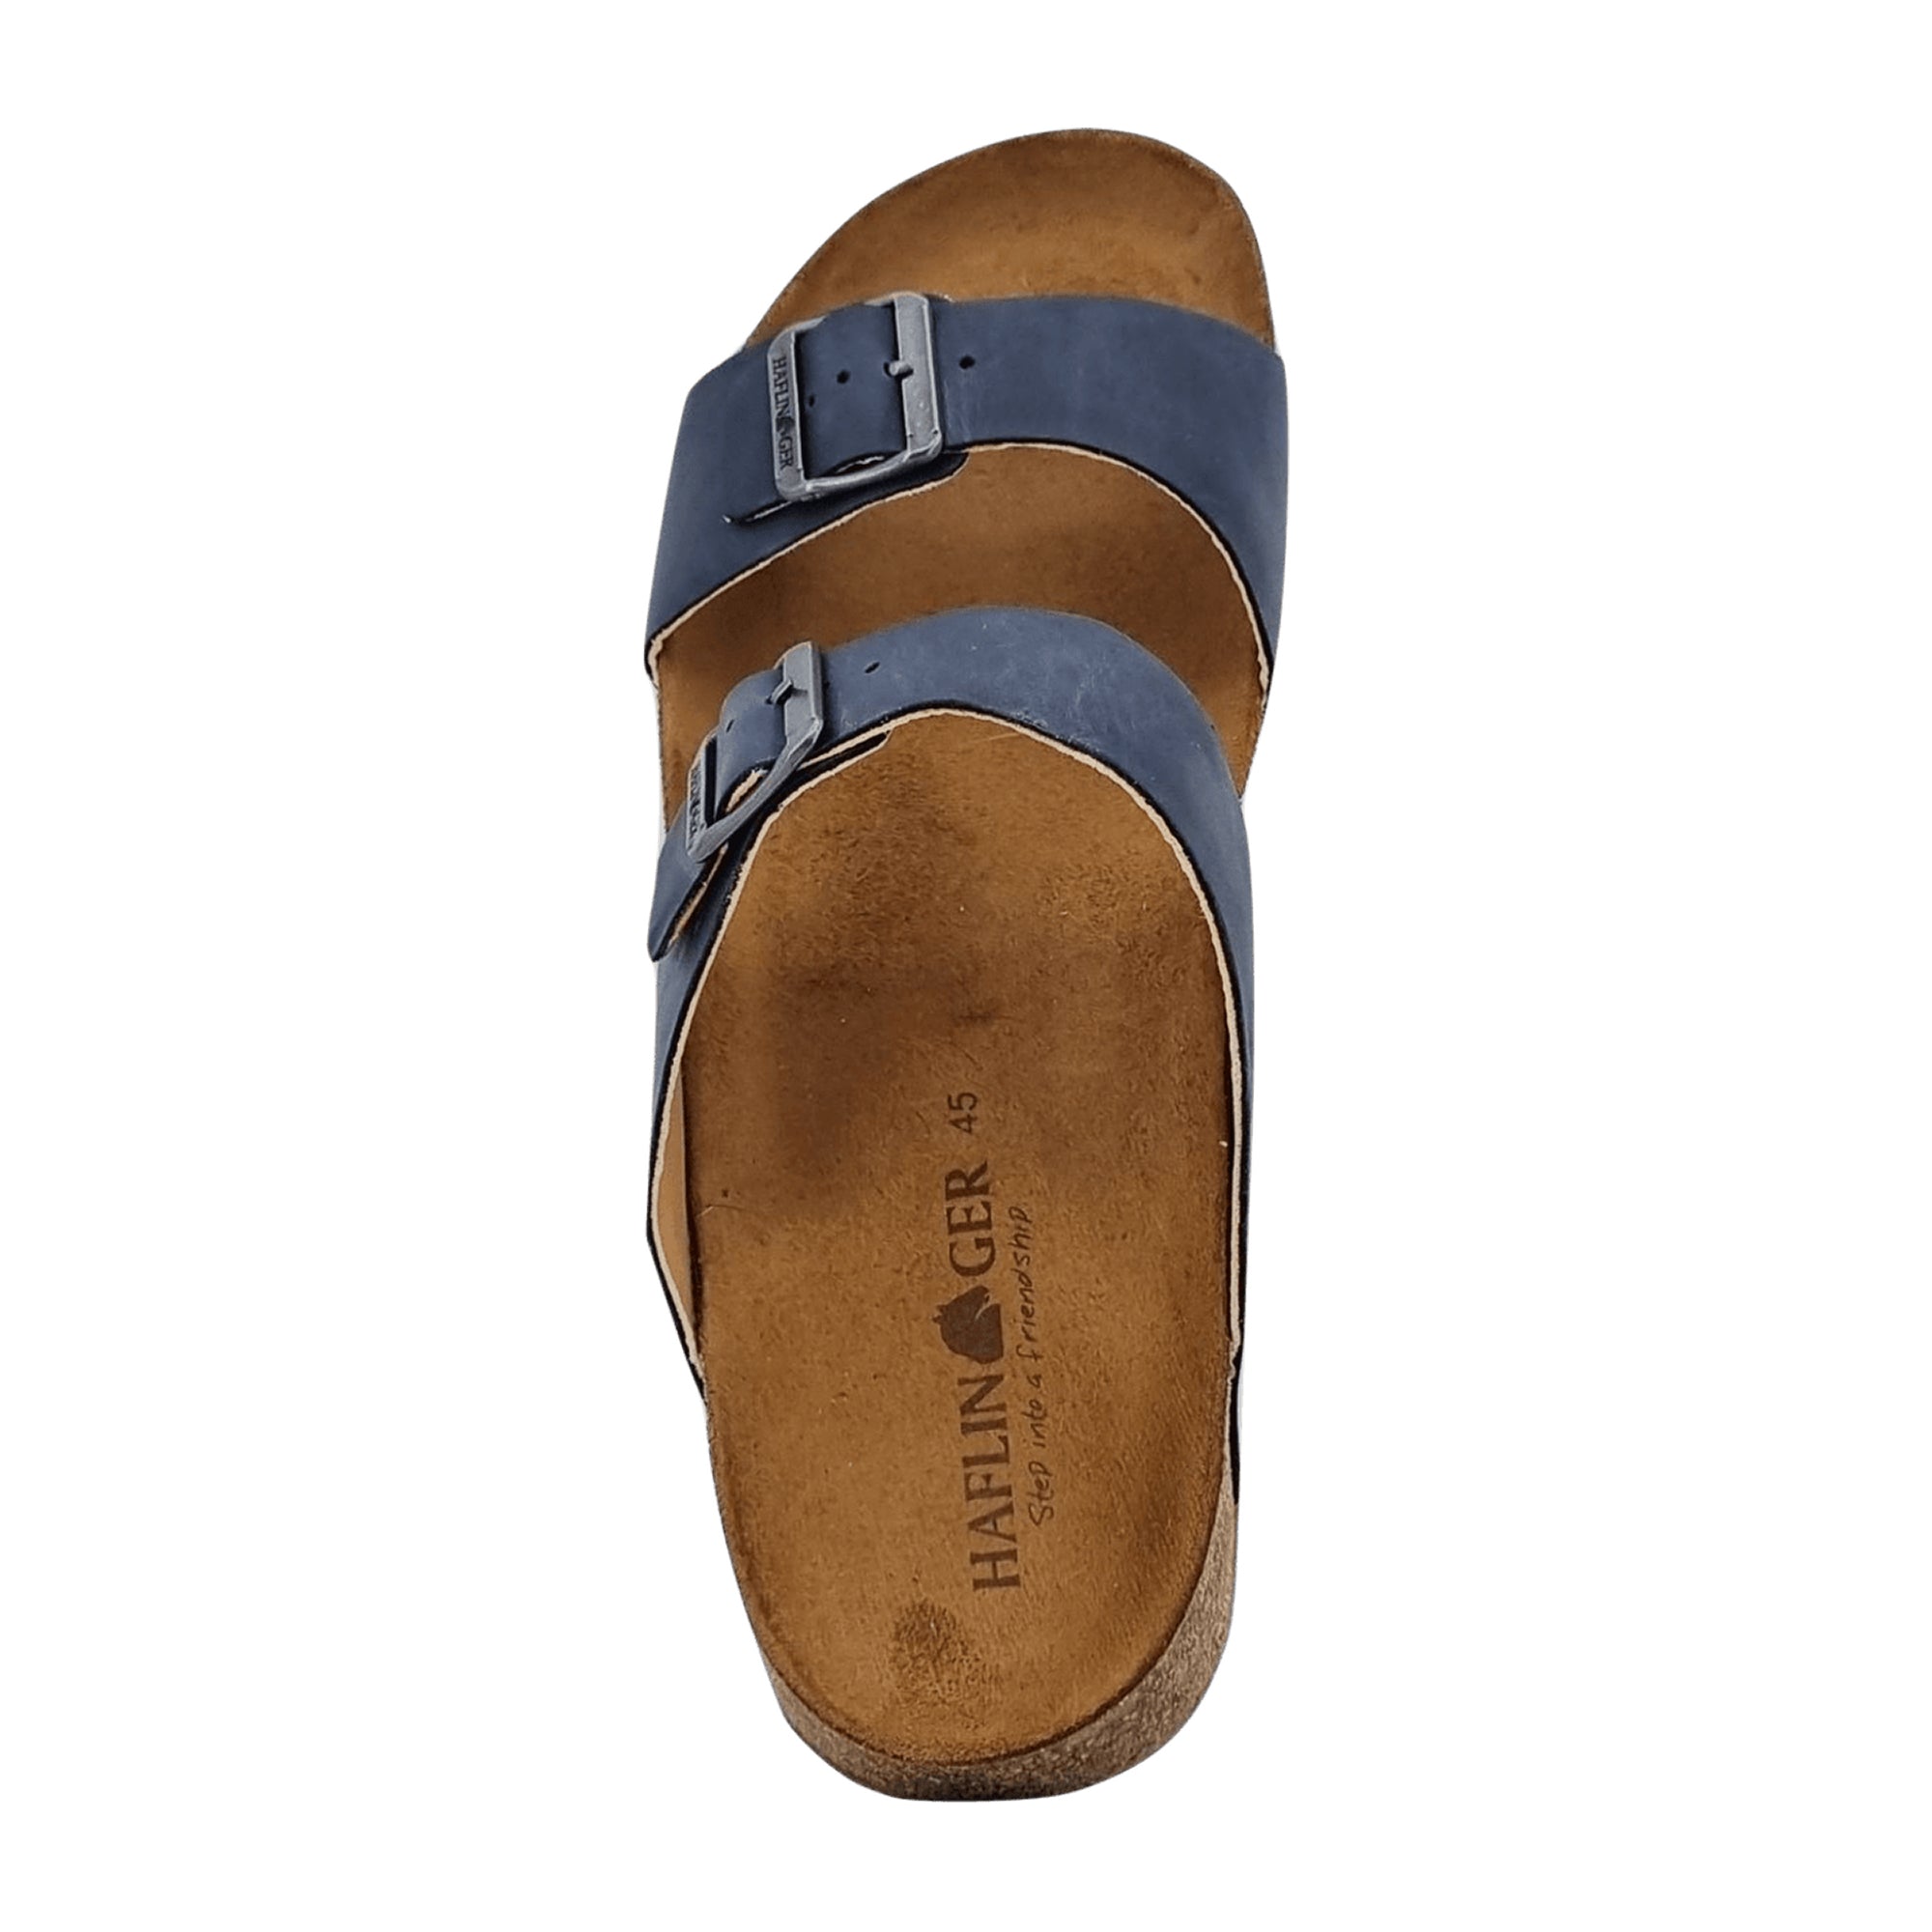 Haflinger Bio Andrea Marine Country Men's Sandals, Blue - EU Size 26